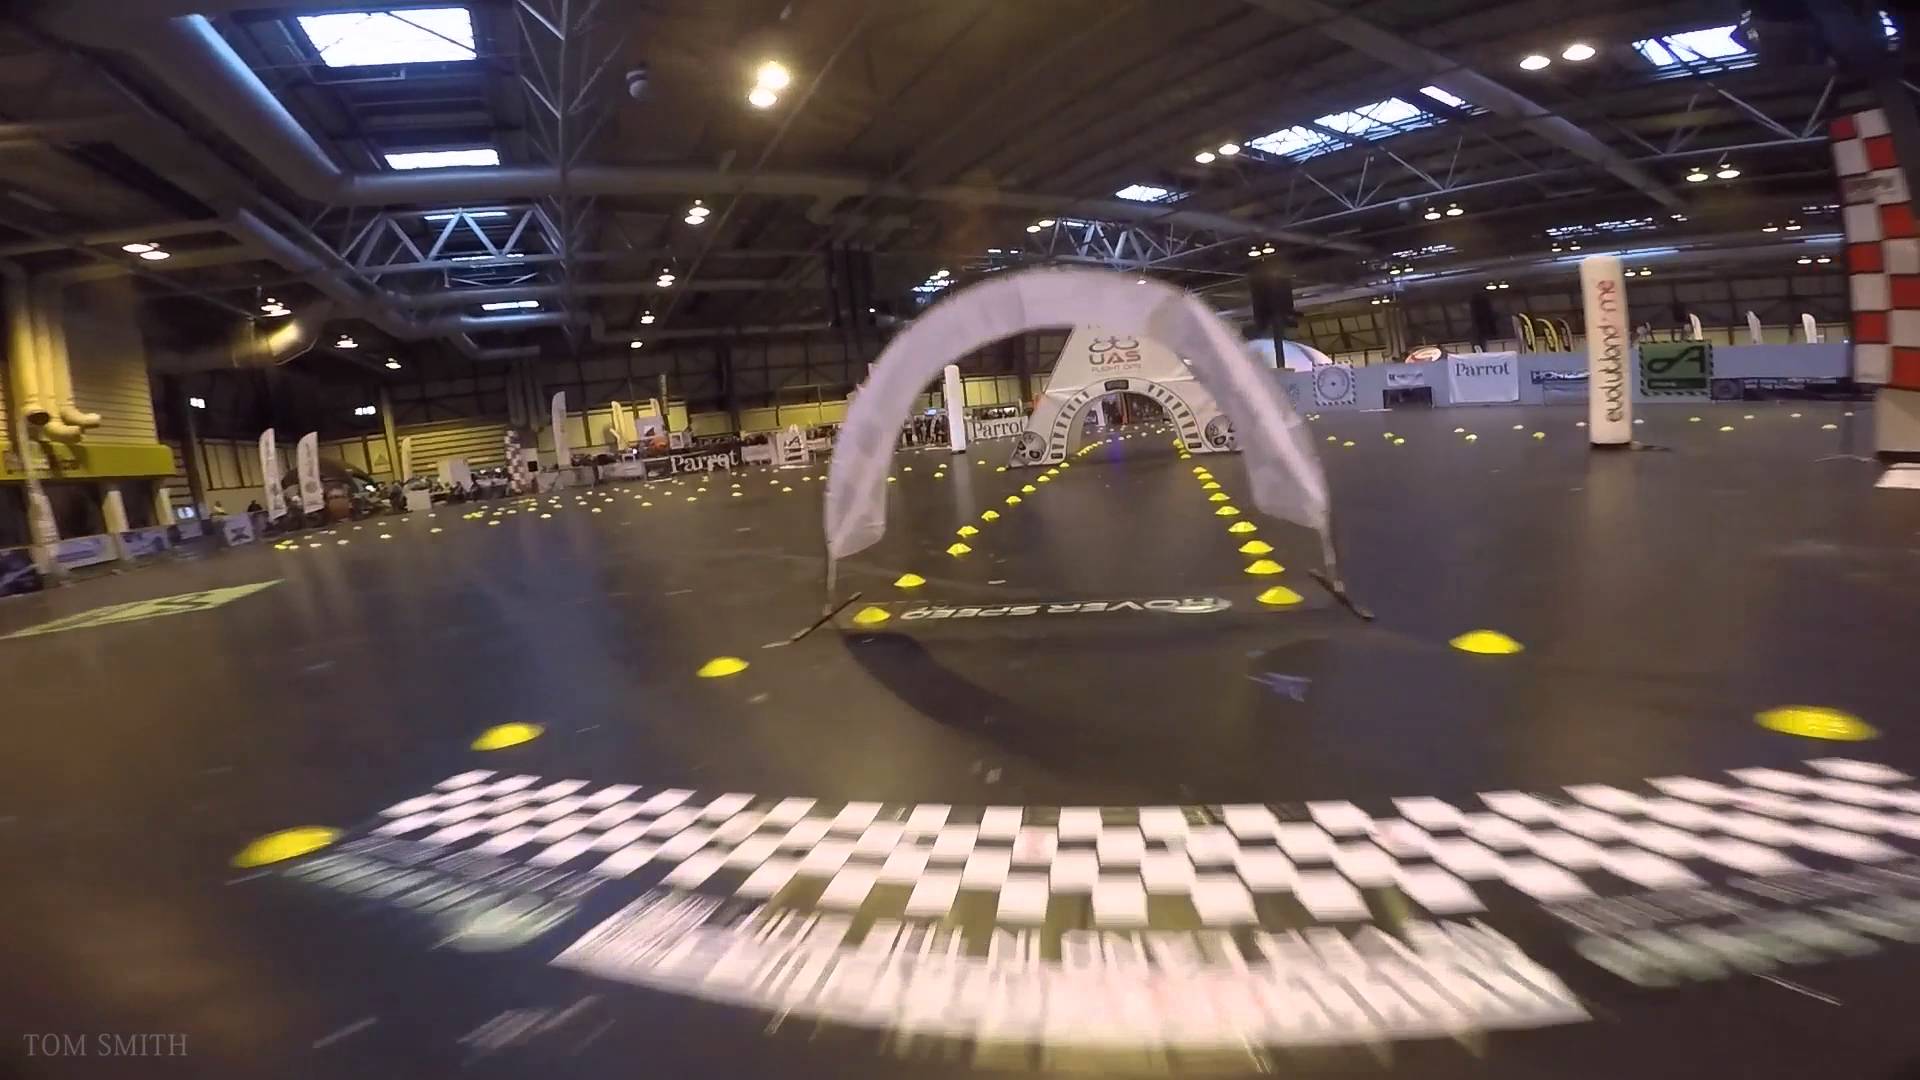 UKDS UK DRONE SHOW FPV RACING NEC 2015